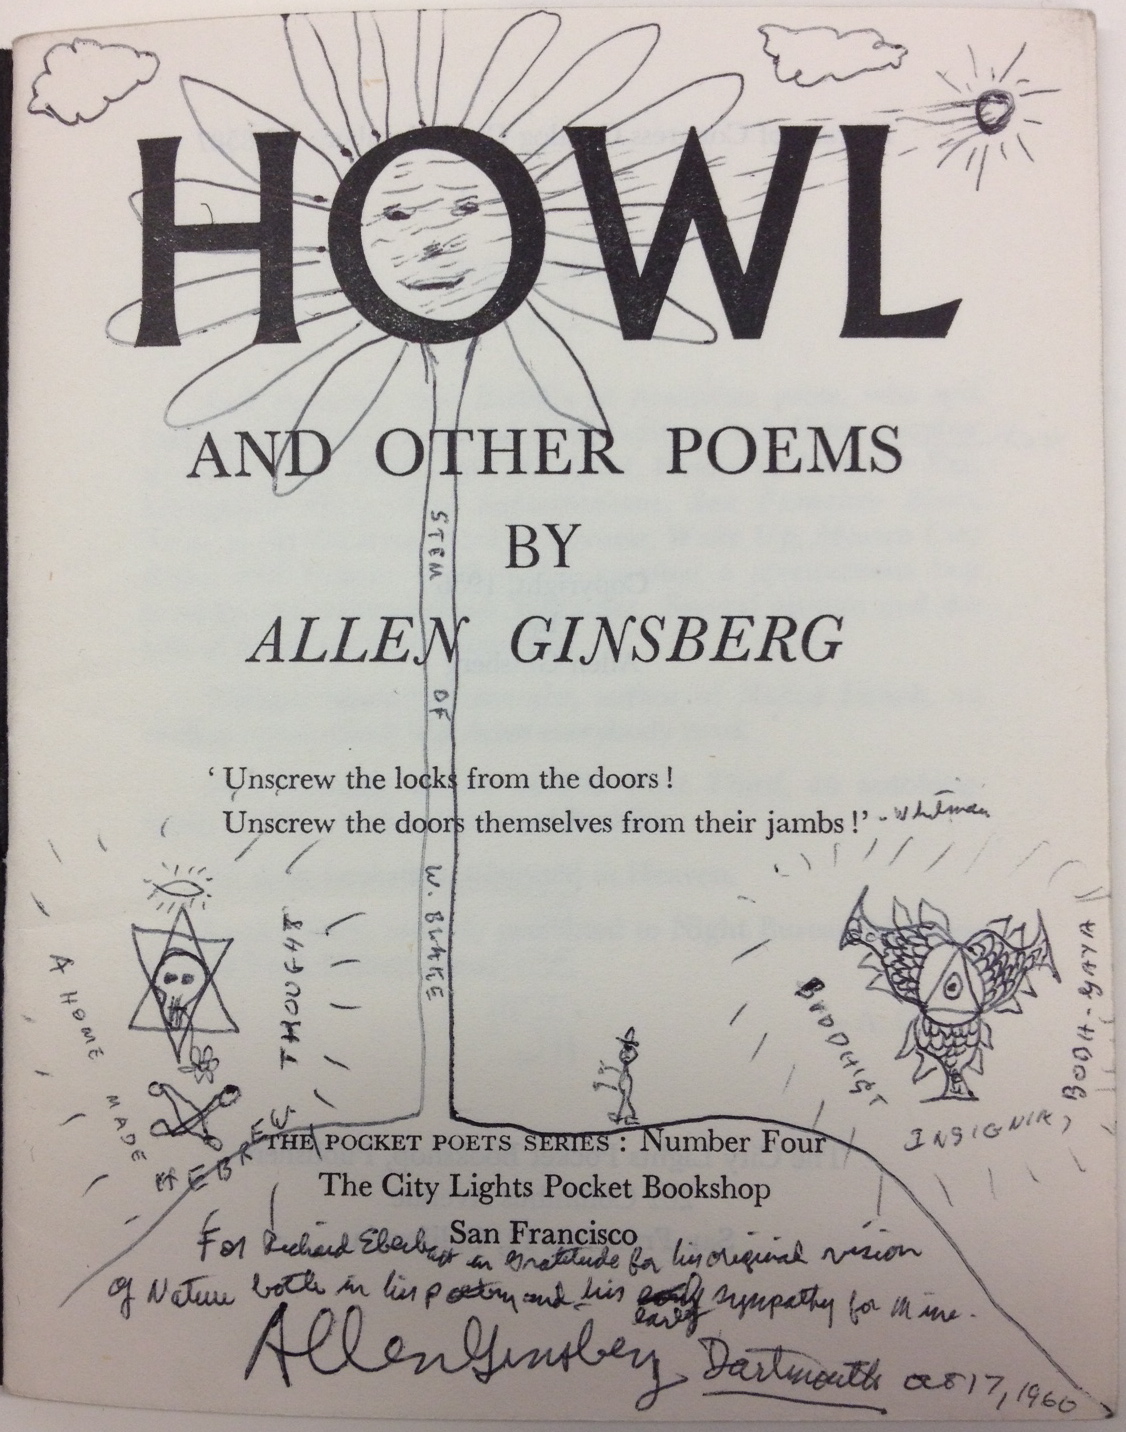 Вопль аллен. Howl Ginsberg. Хаул Аллен Гинзберг. Аллен Гинзберг вопль. “Howl” by Allen Ginsberg.